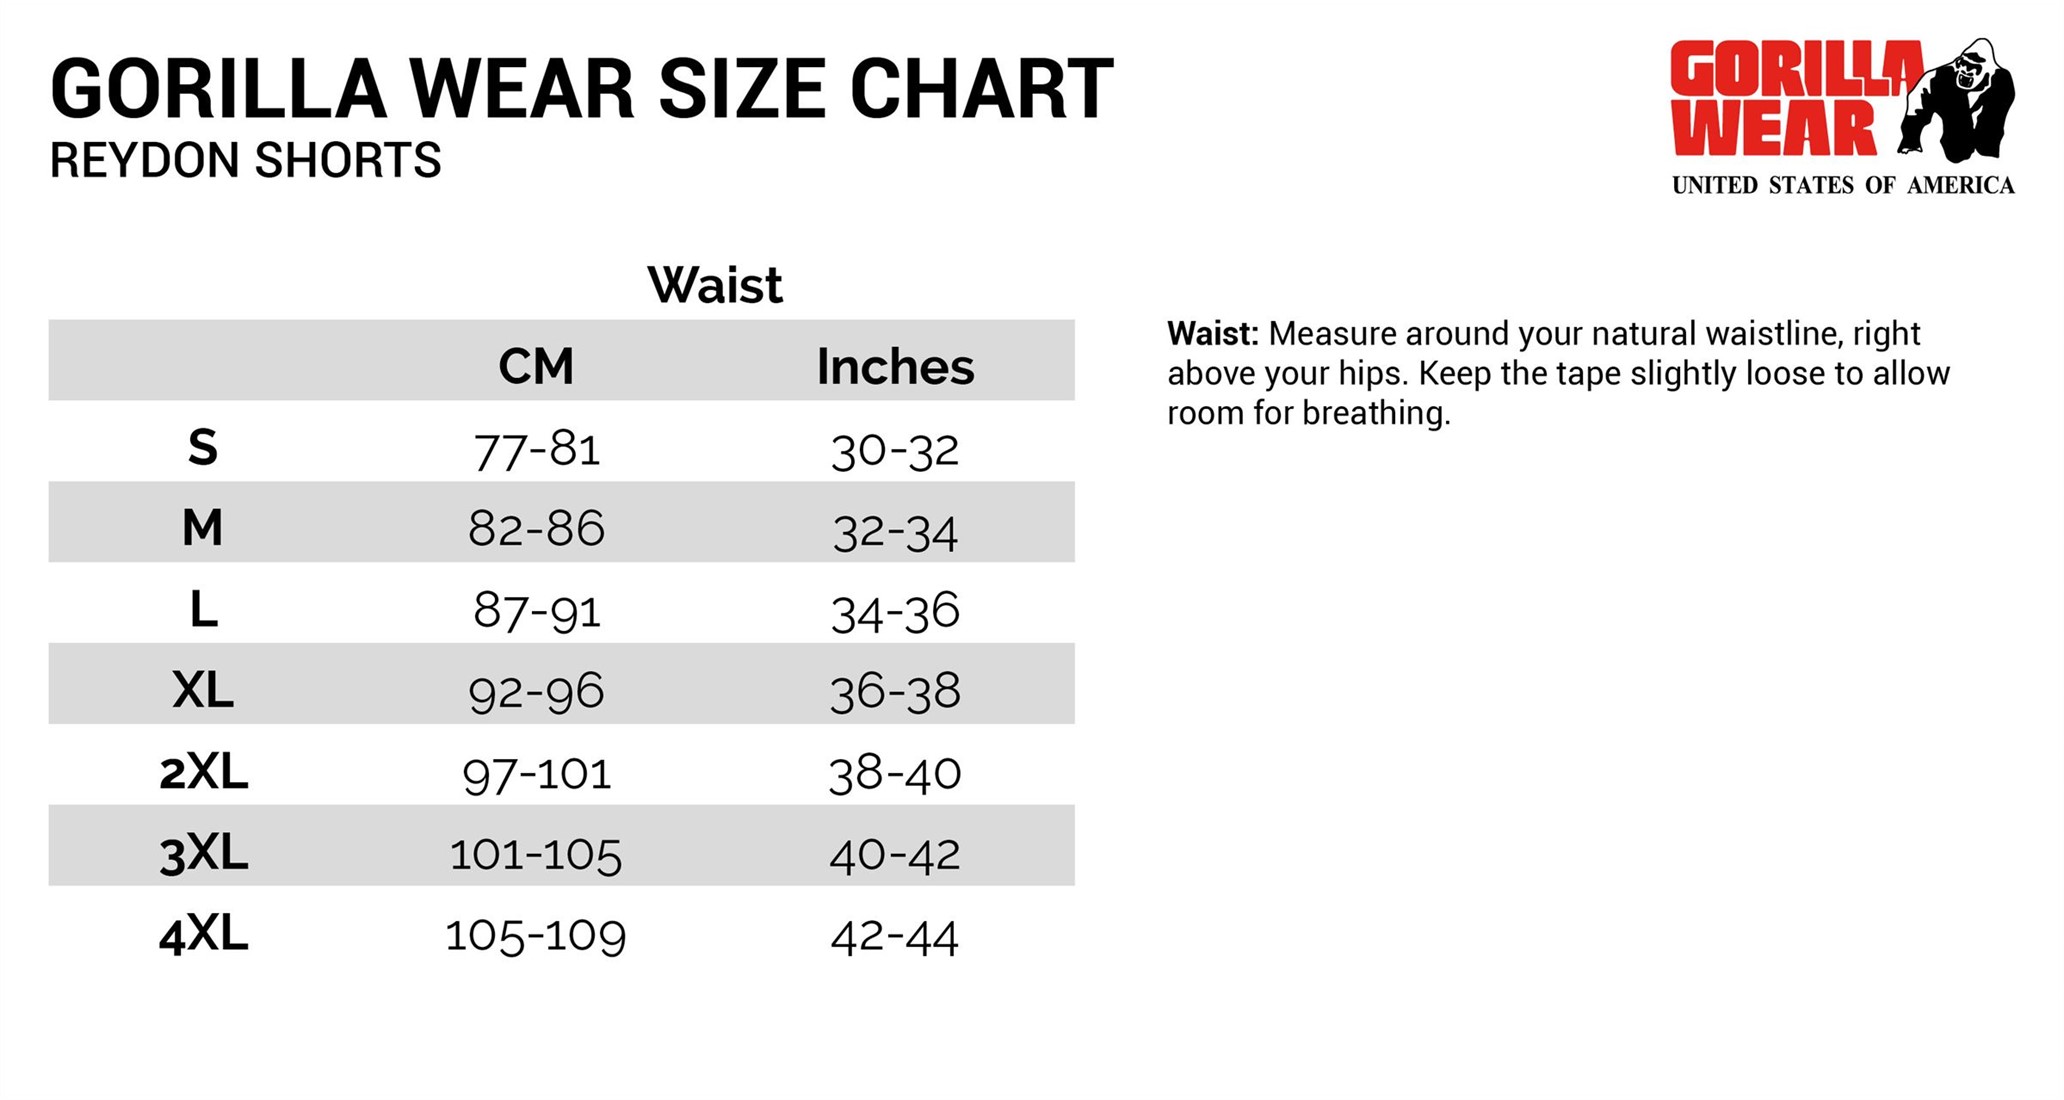 Gorilla Size Chart